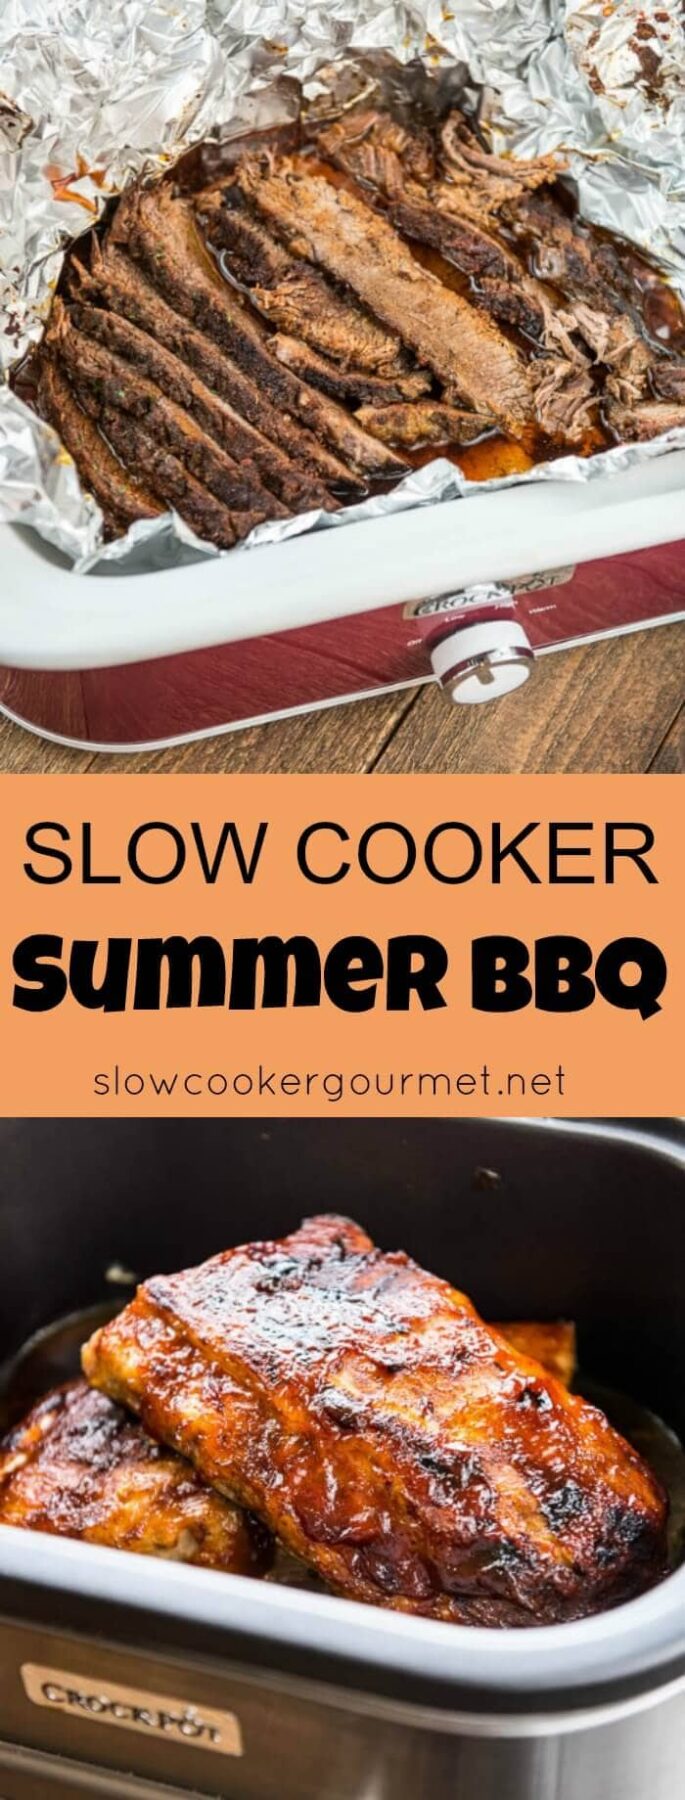 Slow Cooker Summer BBQ